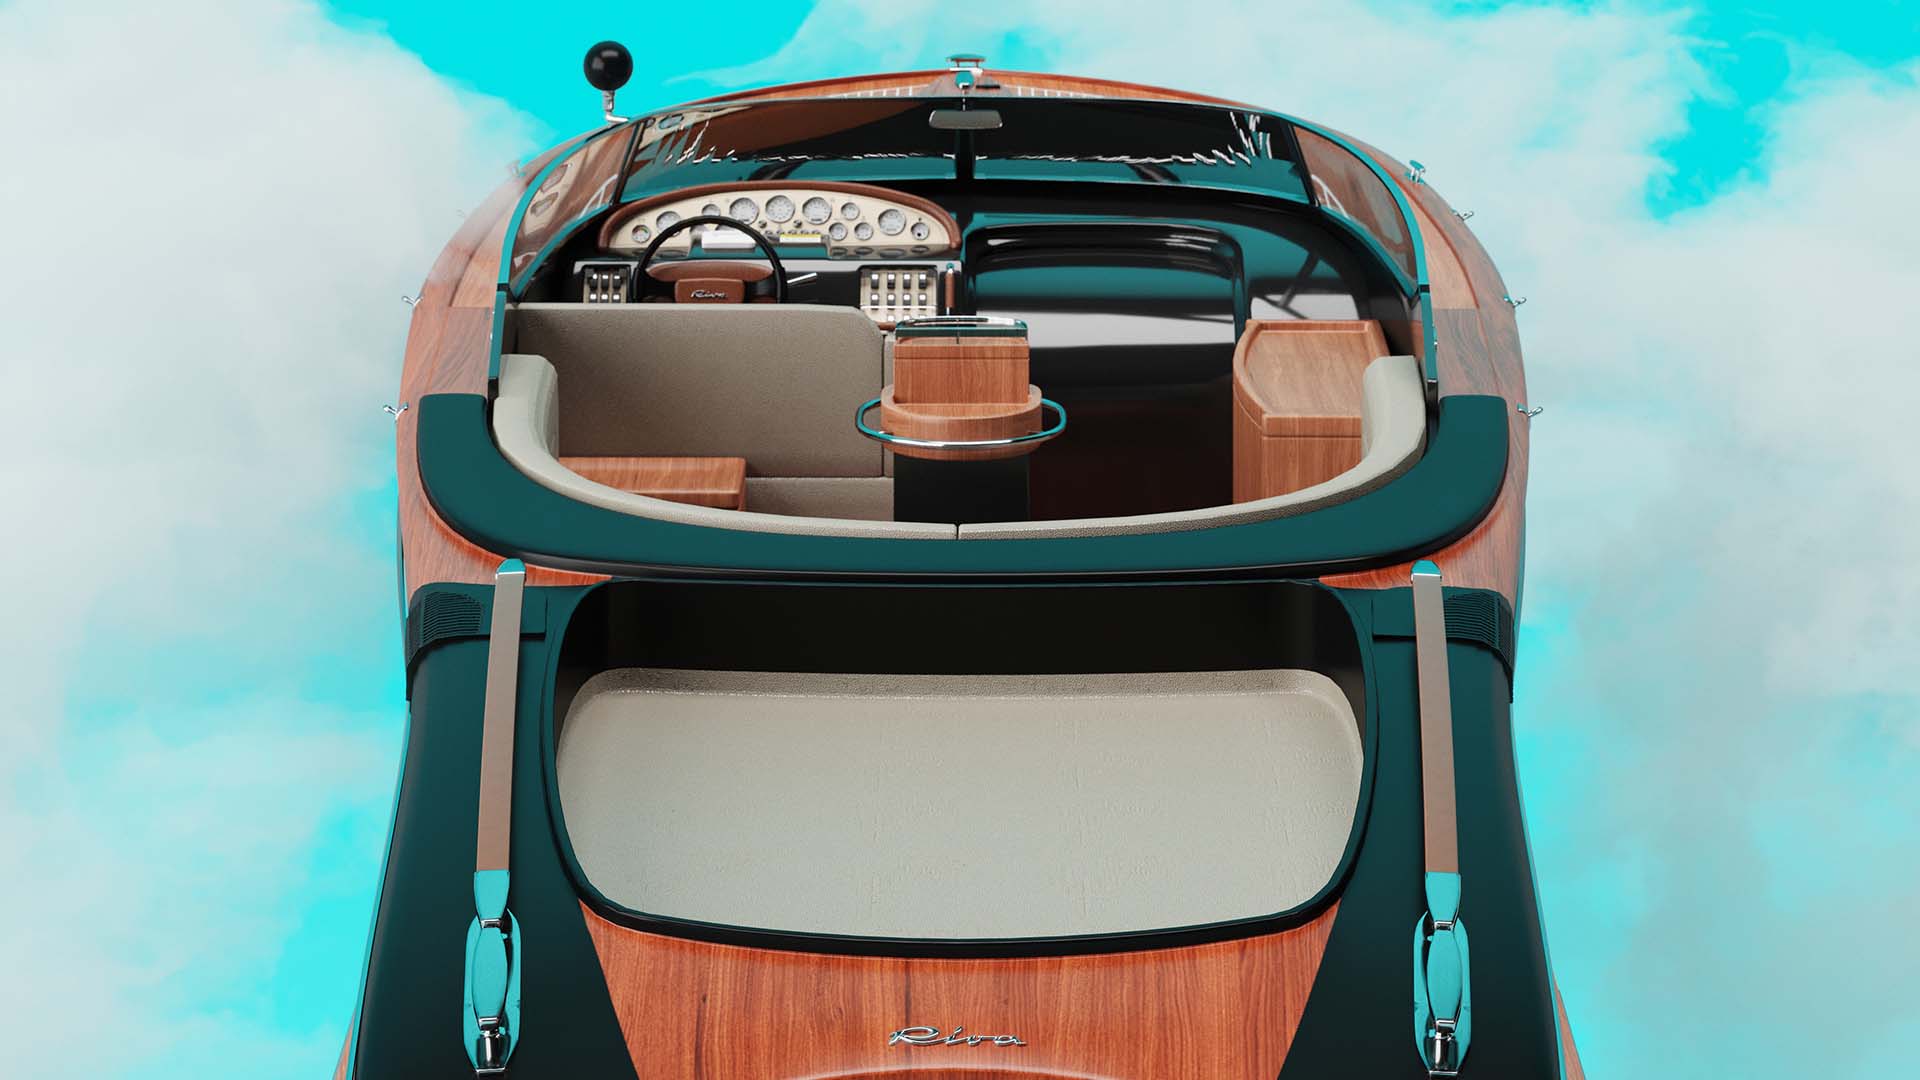 Riva Aquariva super yacht inside the abstract virtual space